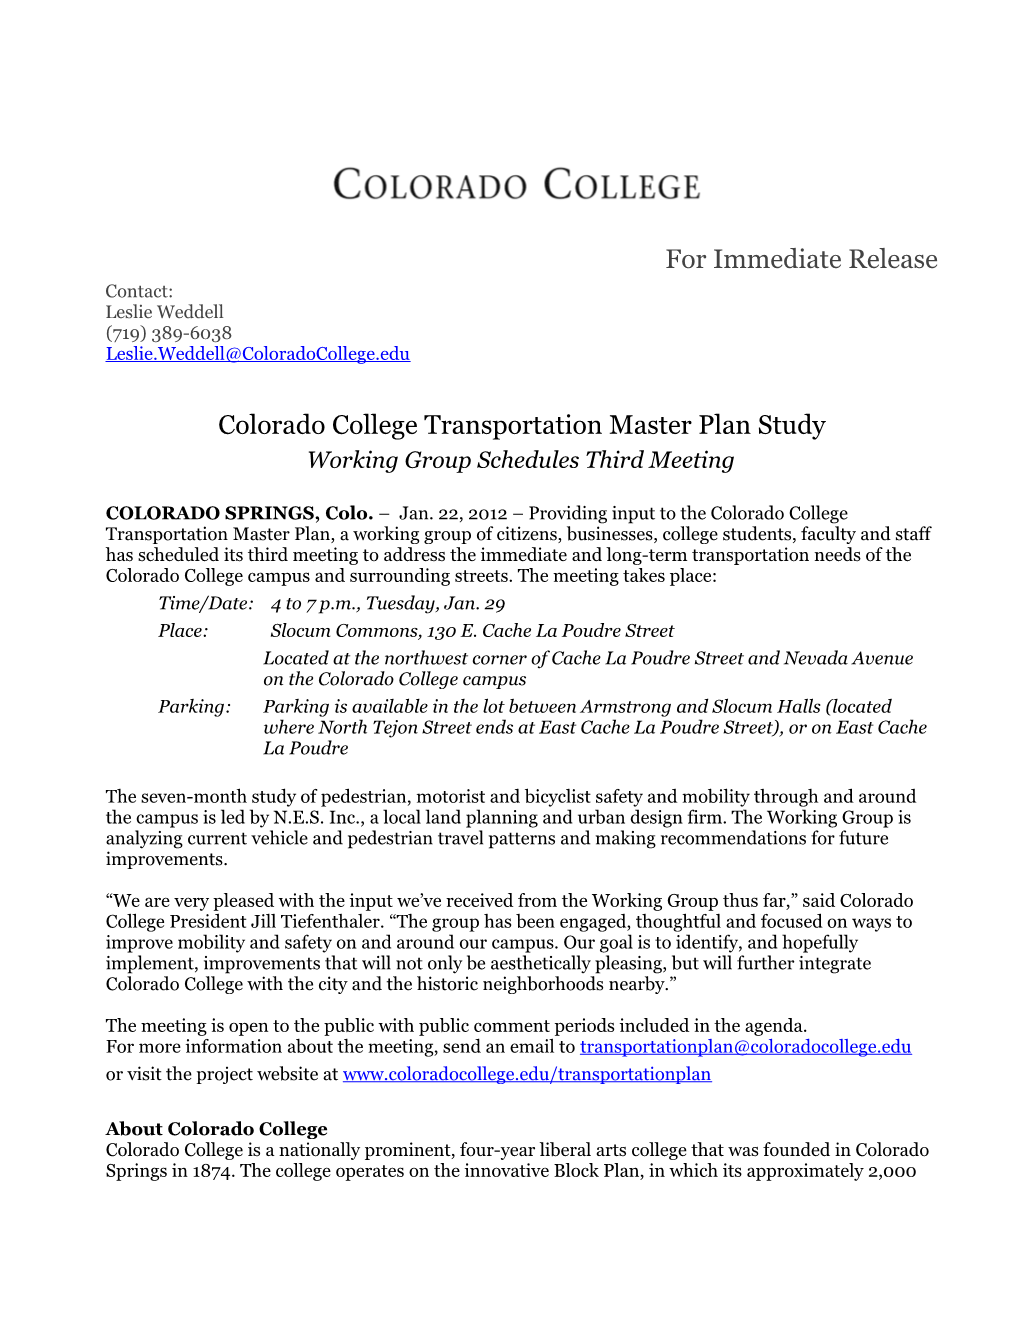 Colorado College Transportation Master Plan Study